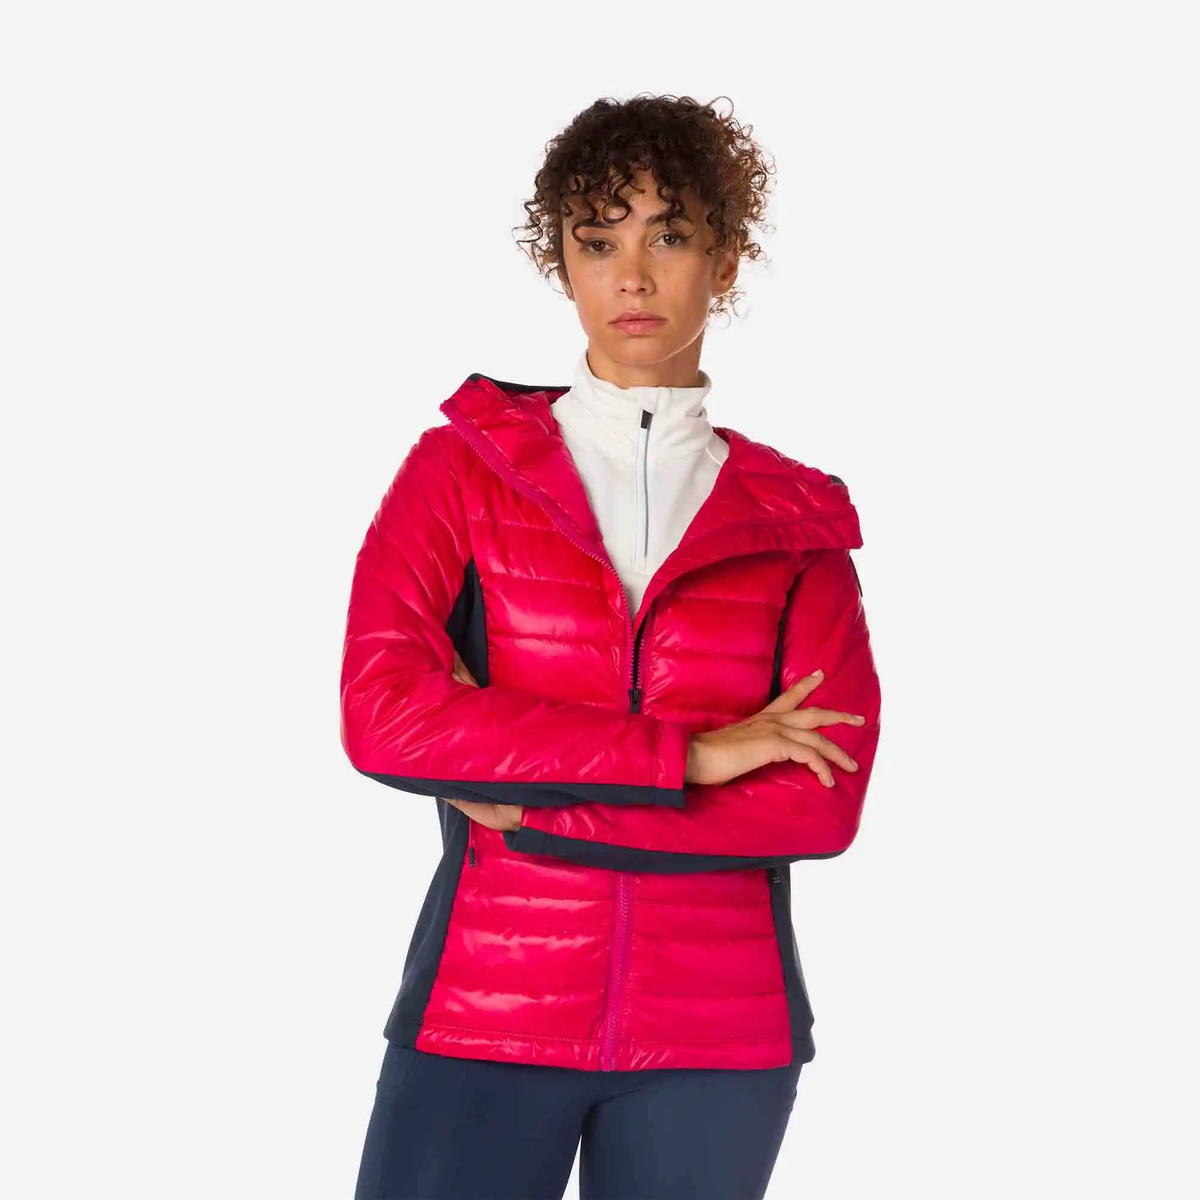 Rossignol SKPR Hybrid Light ski jas roze dames